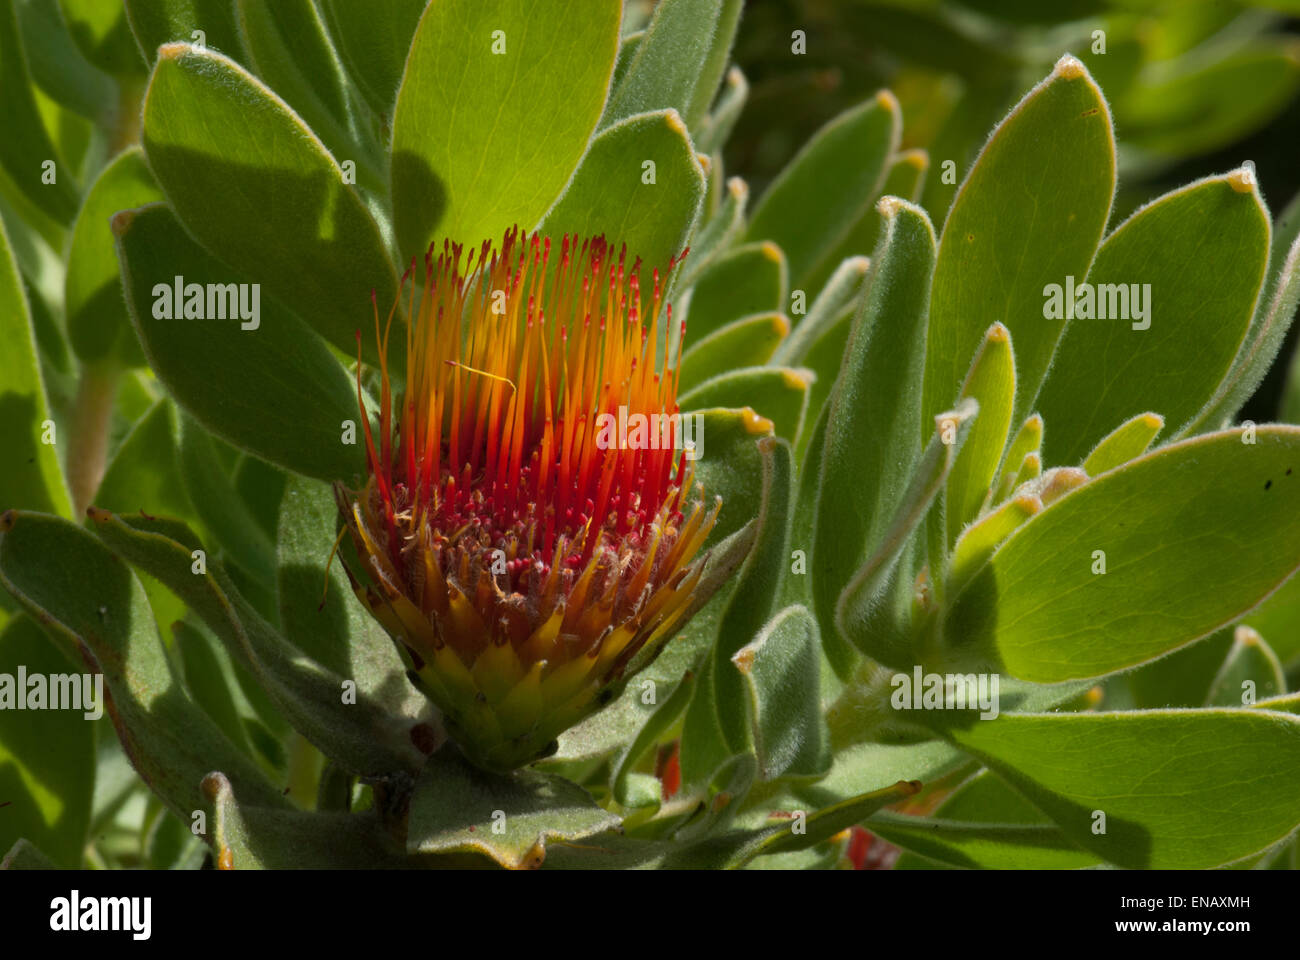 Protea leucospermum oleifolium. Tufted pincushion. Kirstenbosch national botanical garden. Cape Town. South Africa Stock Photo